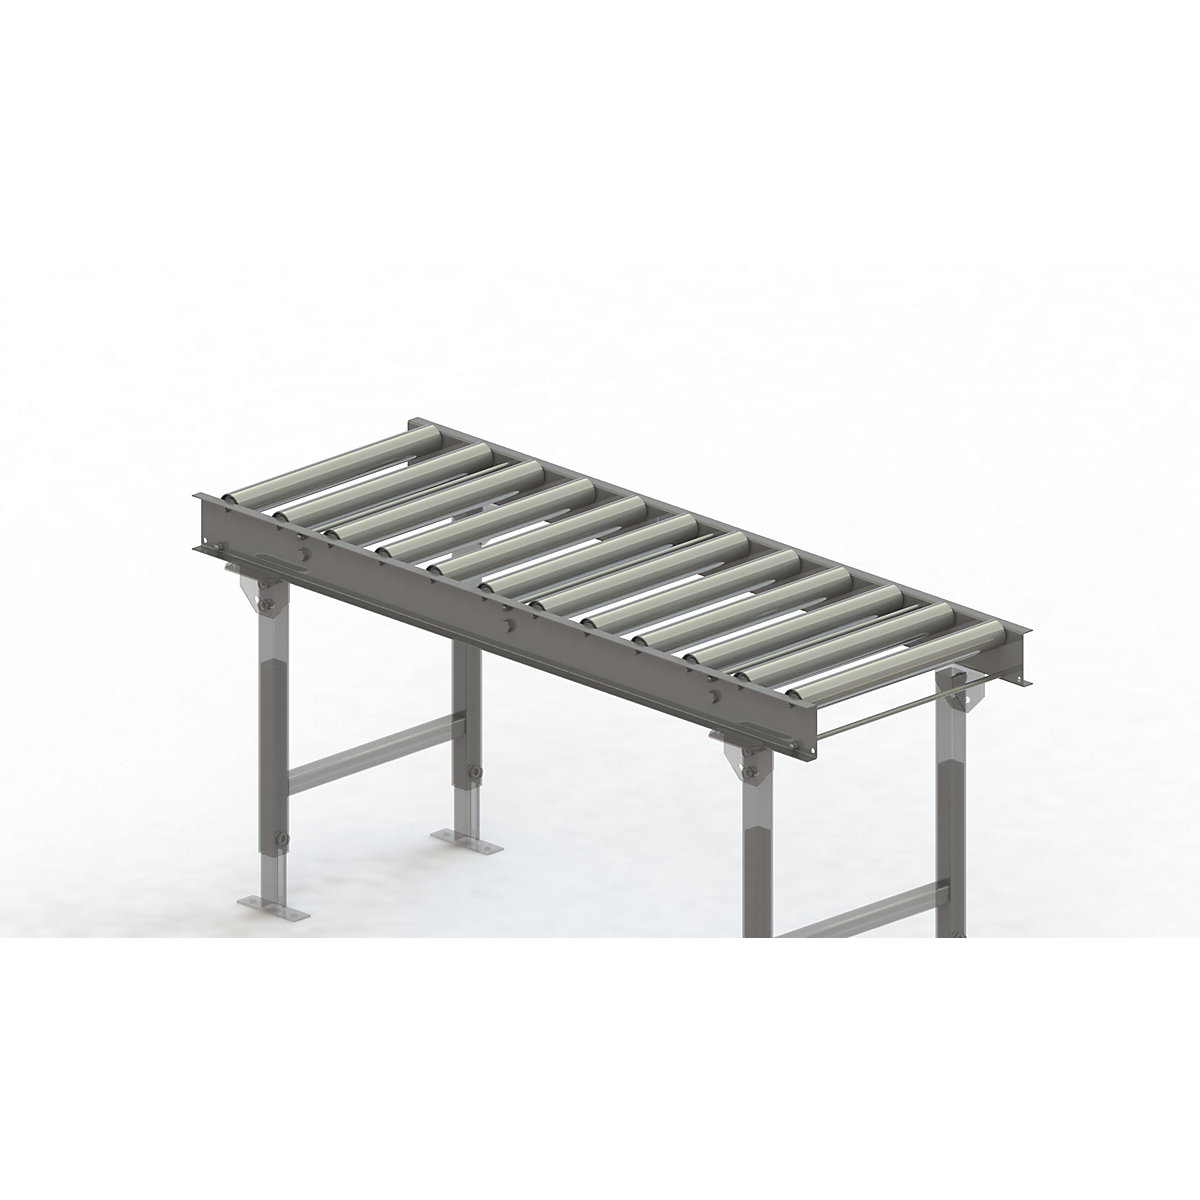 Gura – Roller conveyor, steel frame with zinc plated steel rollers, track width 500 mm, distance between axles 125 mm, length 1.5 m